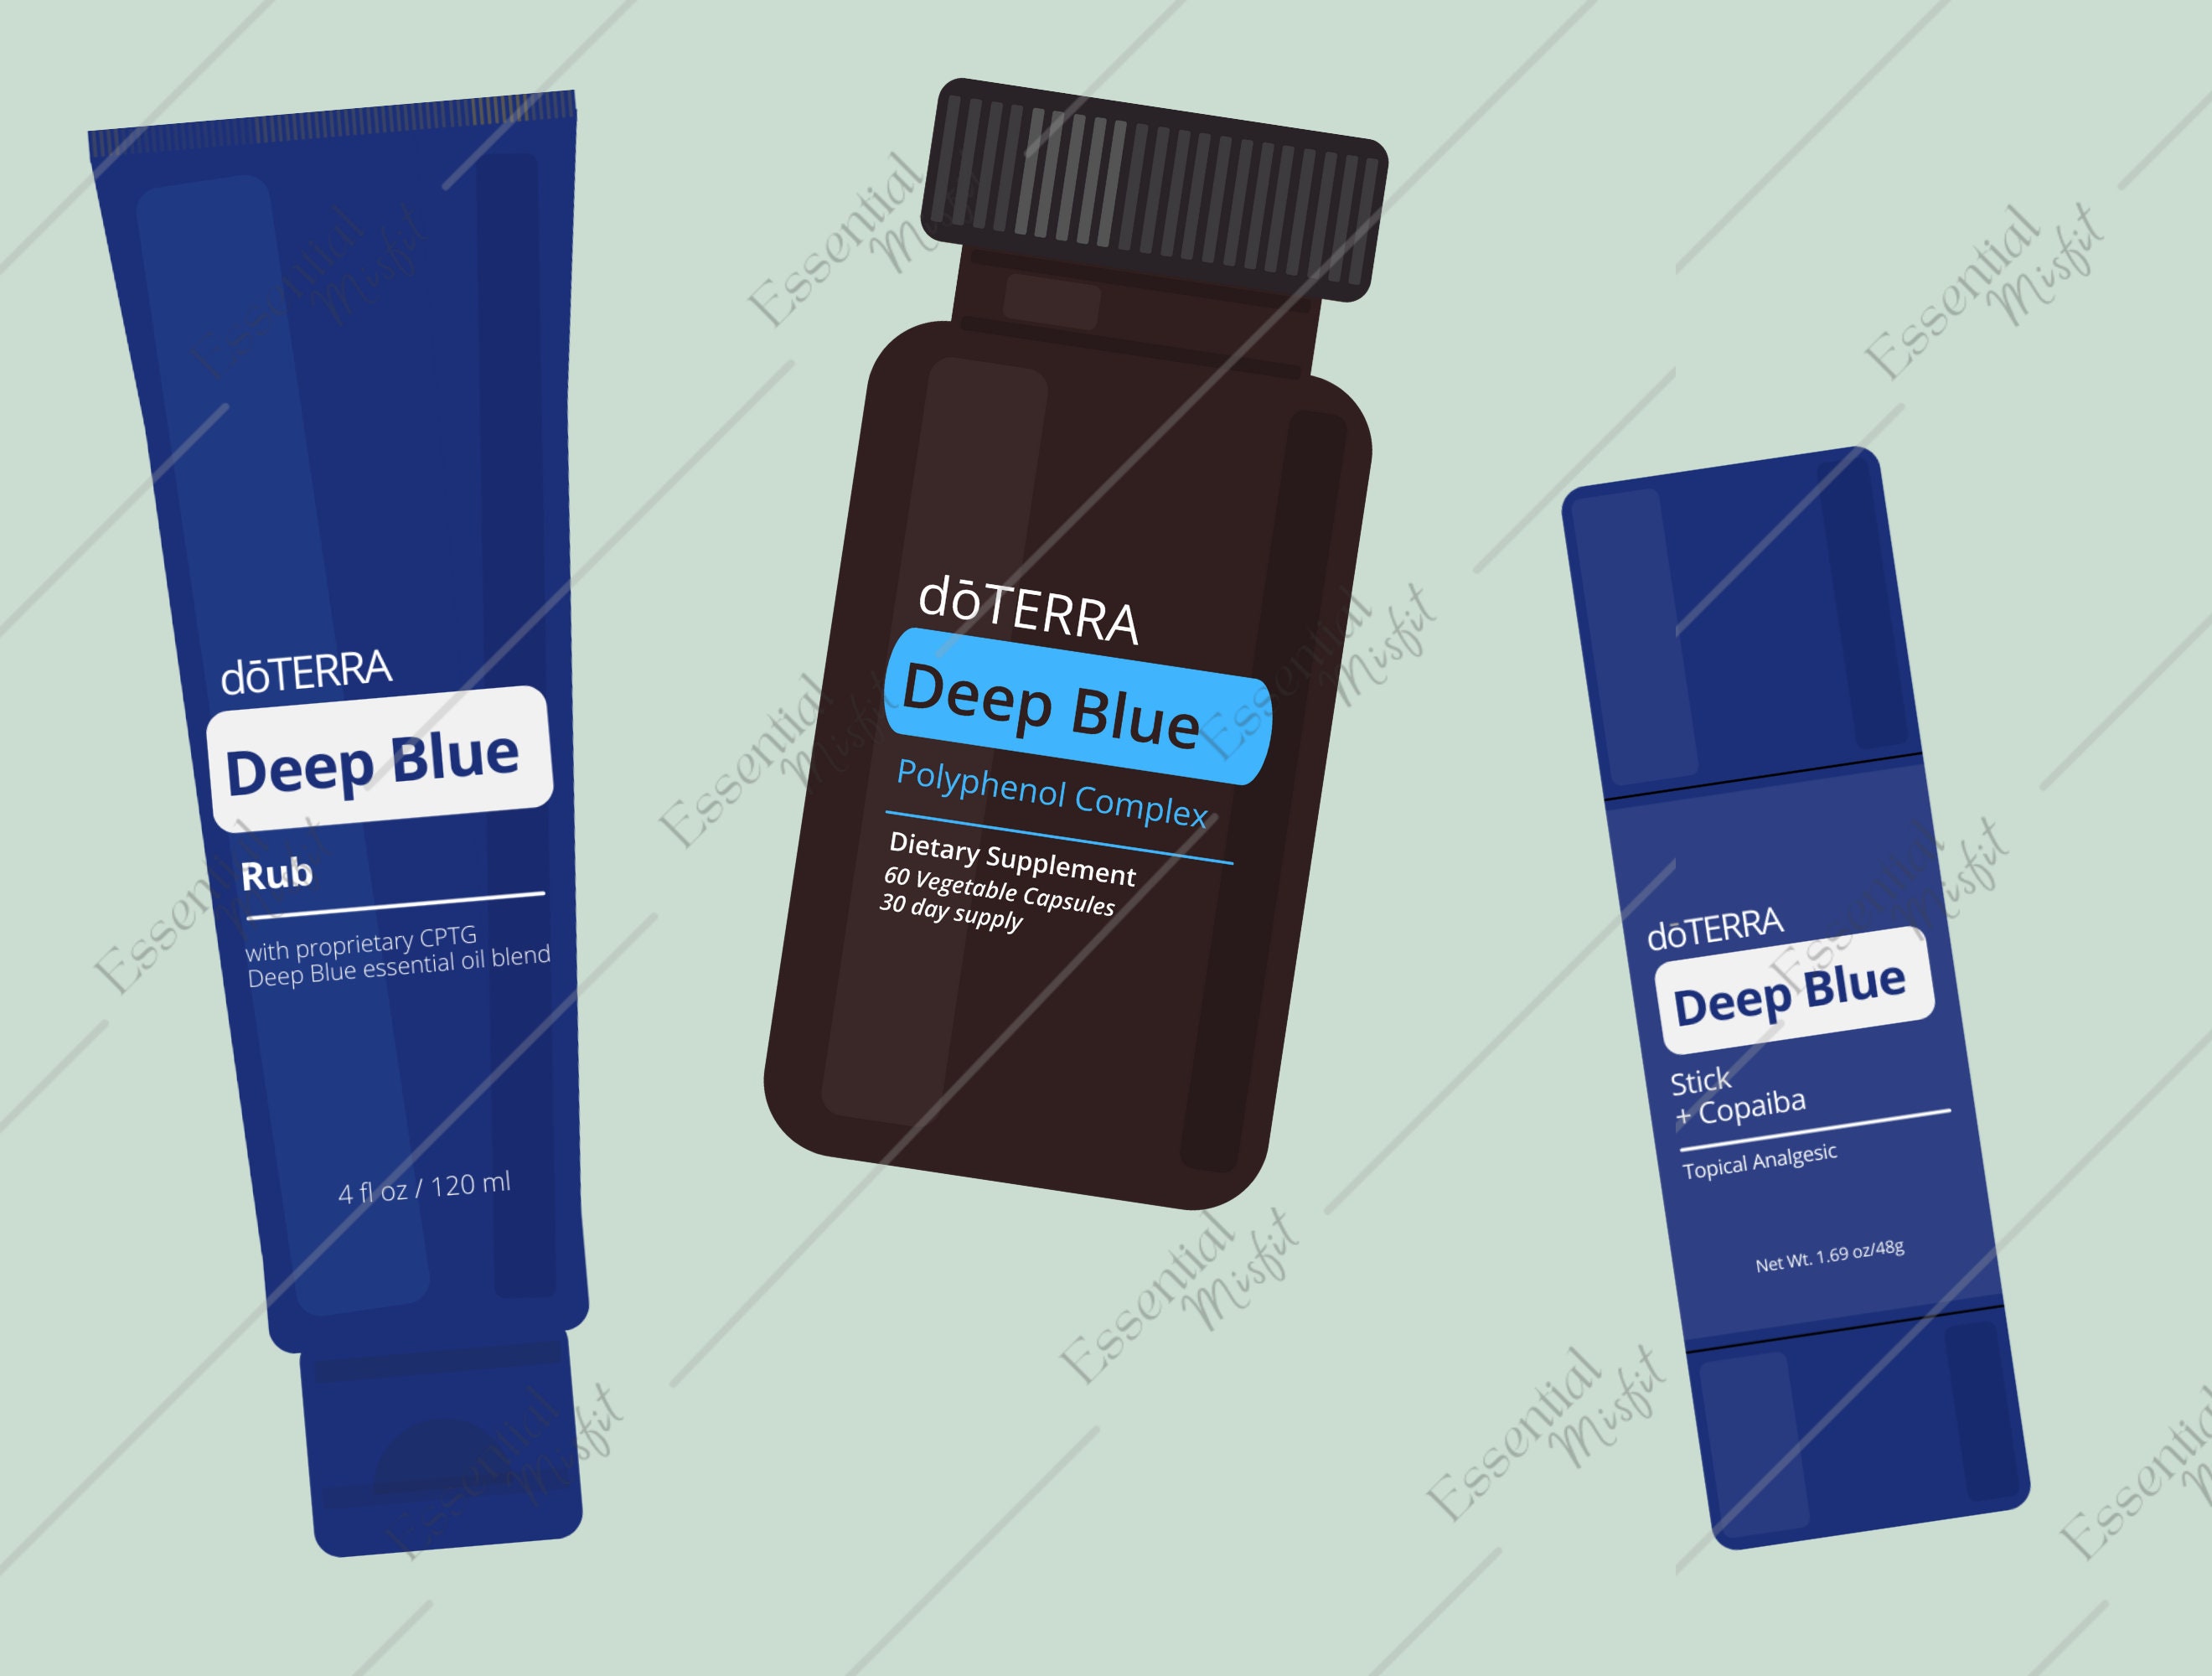 DoTerra - Deep Blue Polyphenol Complex - 60 Vegetarian Capsules